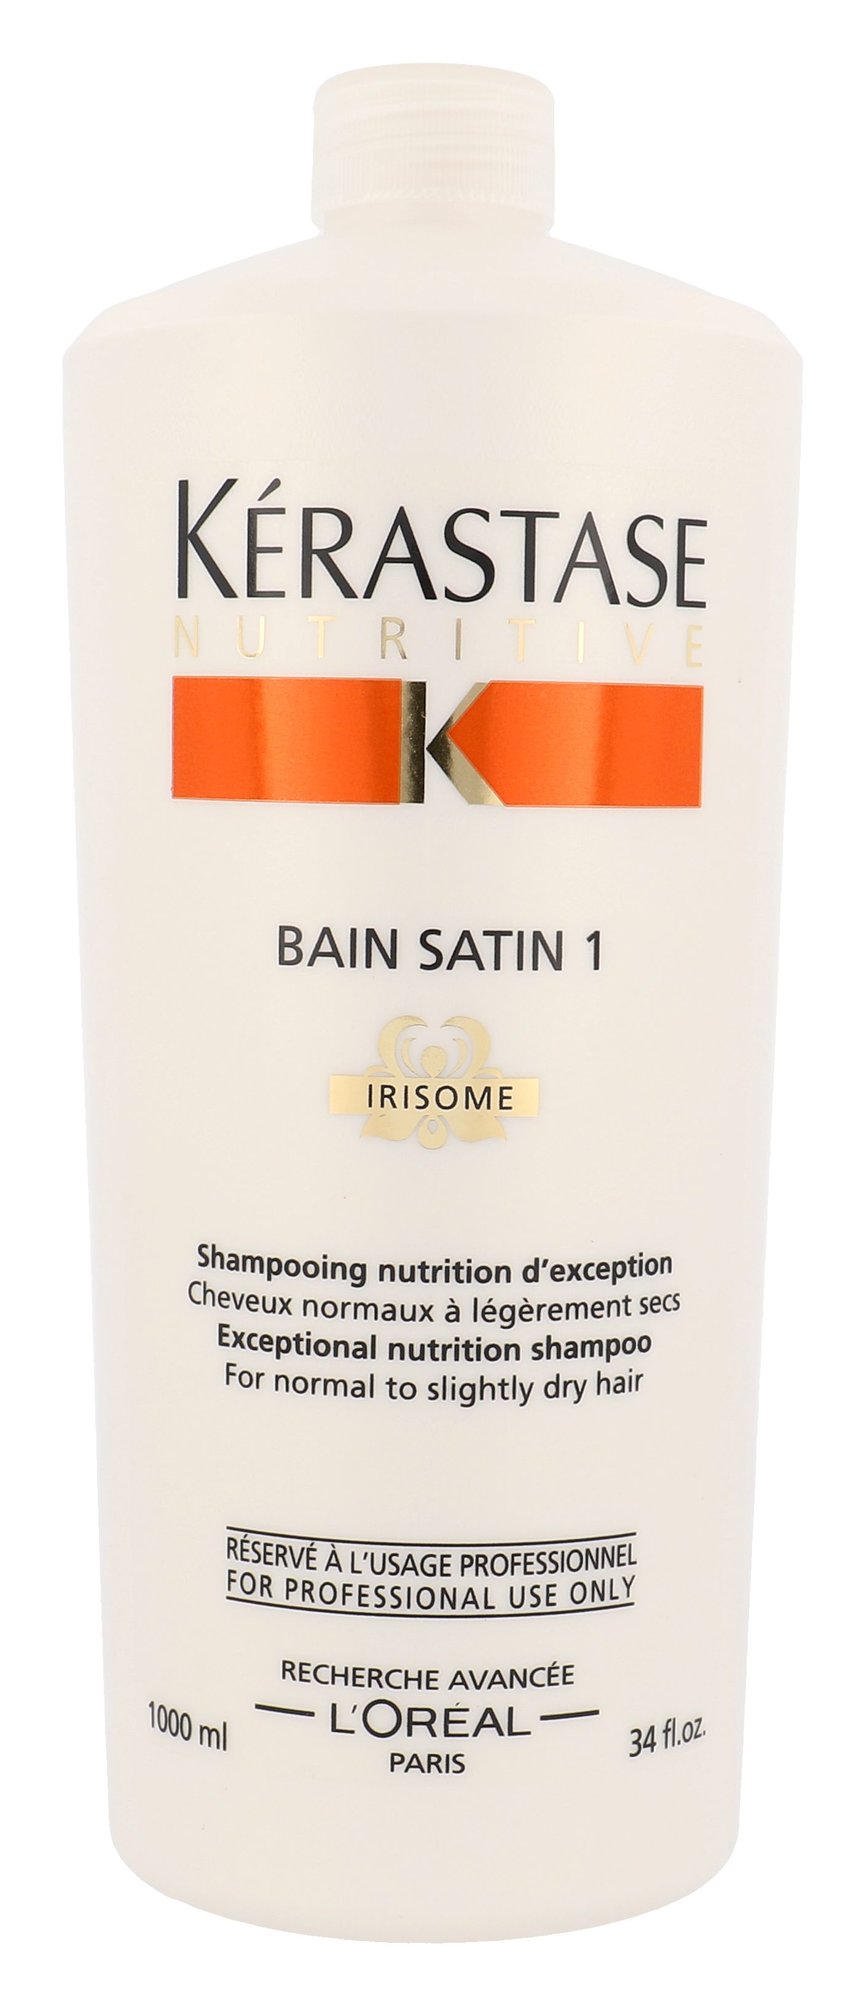 Kerastase Nutritive Bain Satin 1 Irisome Normal to Dry Hair